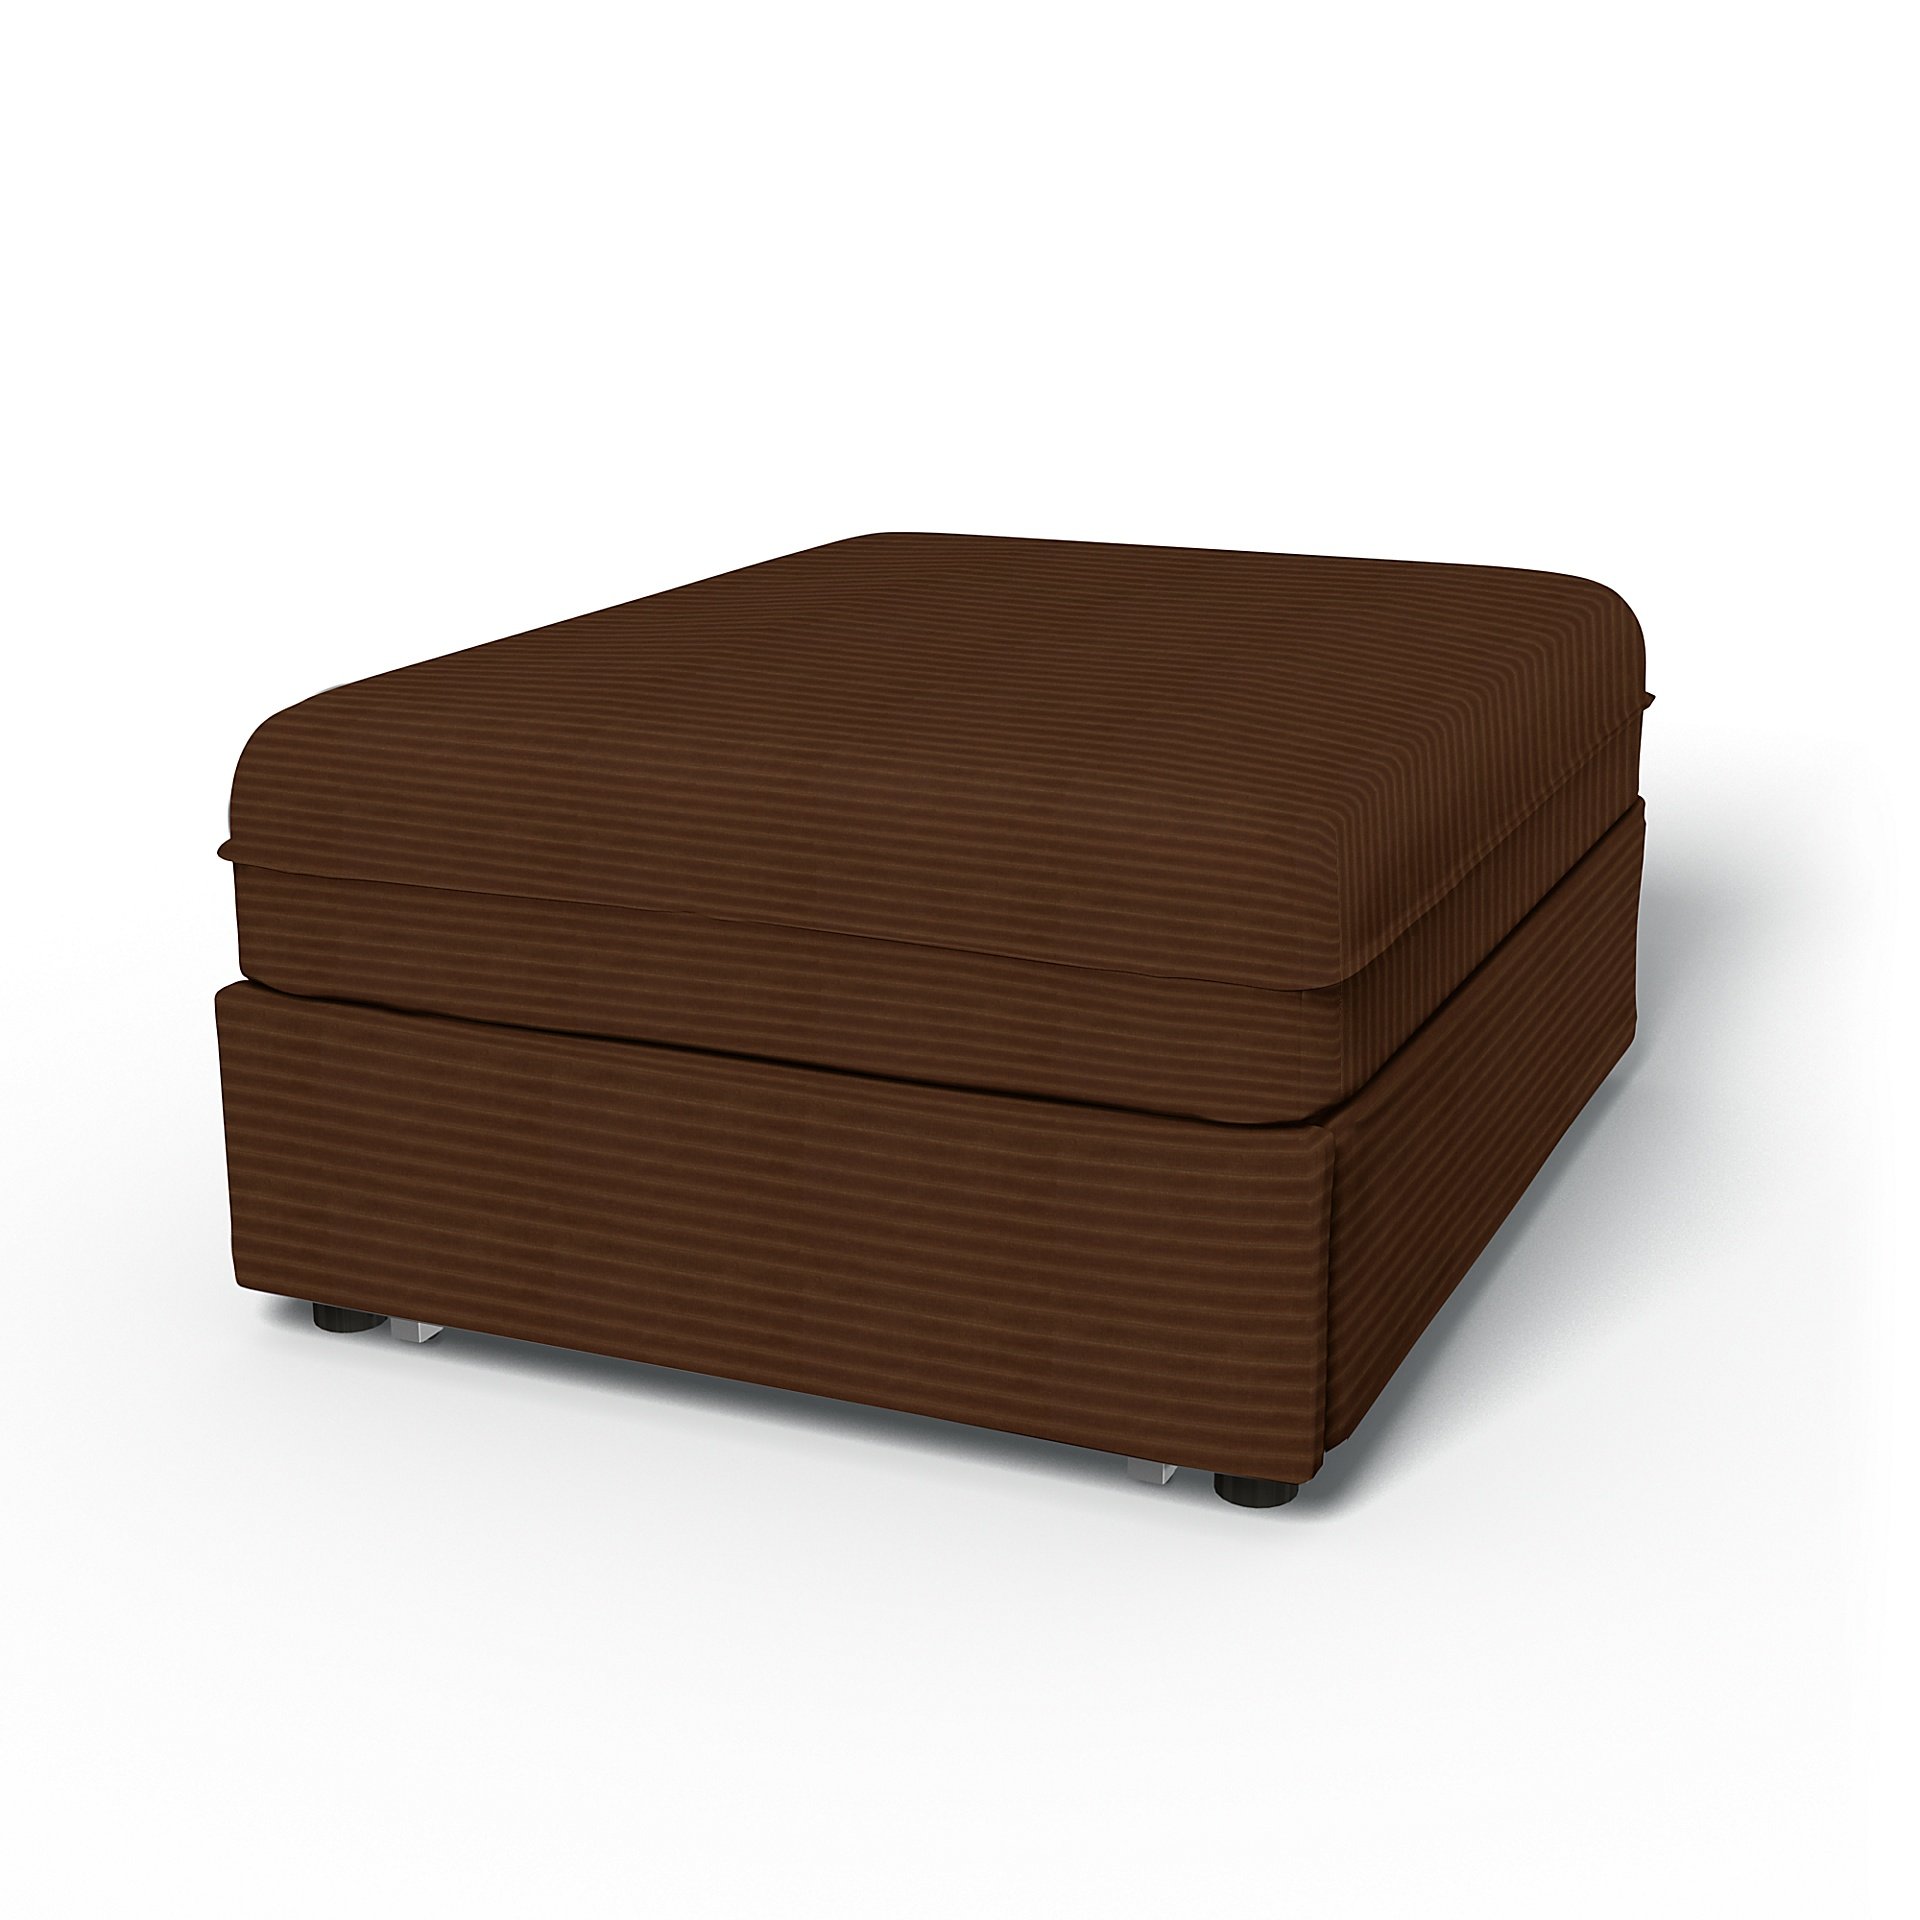 IKEA - Vallentuna Seat Module with Sofa Bed Cover 80x100cm 32x39in, Chocolate Brown, Corduroy - Bemz